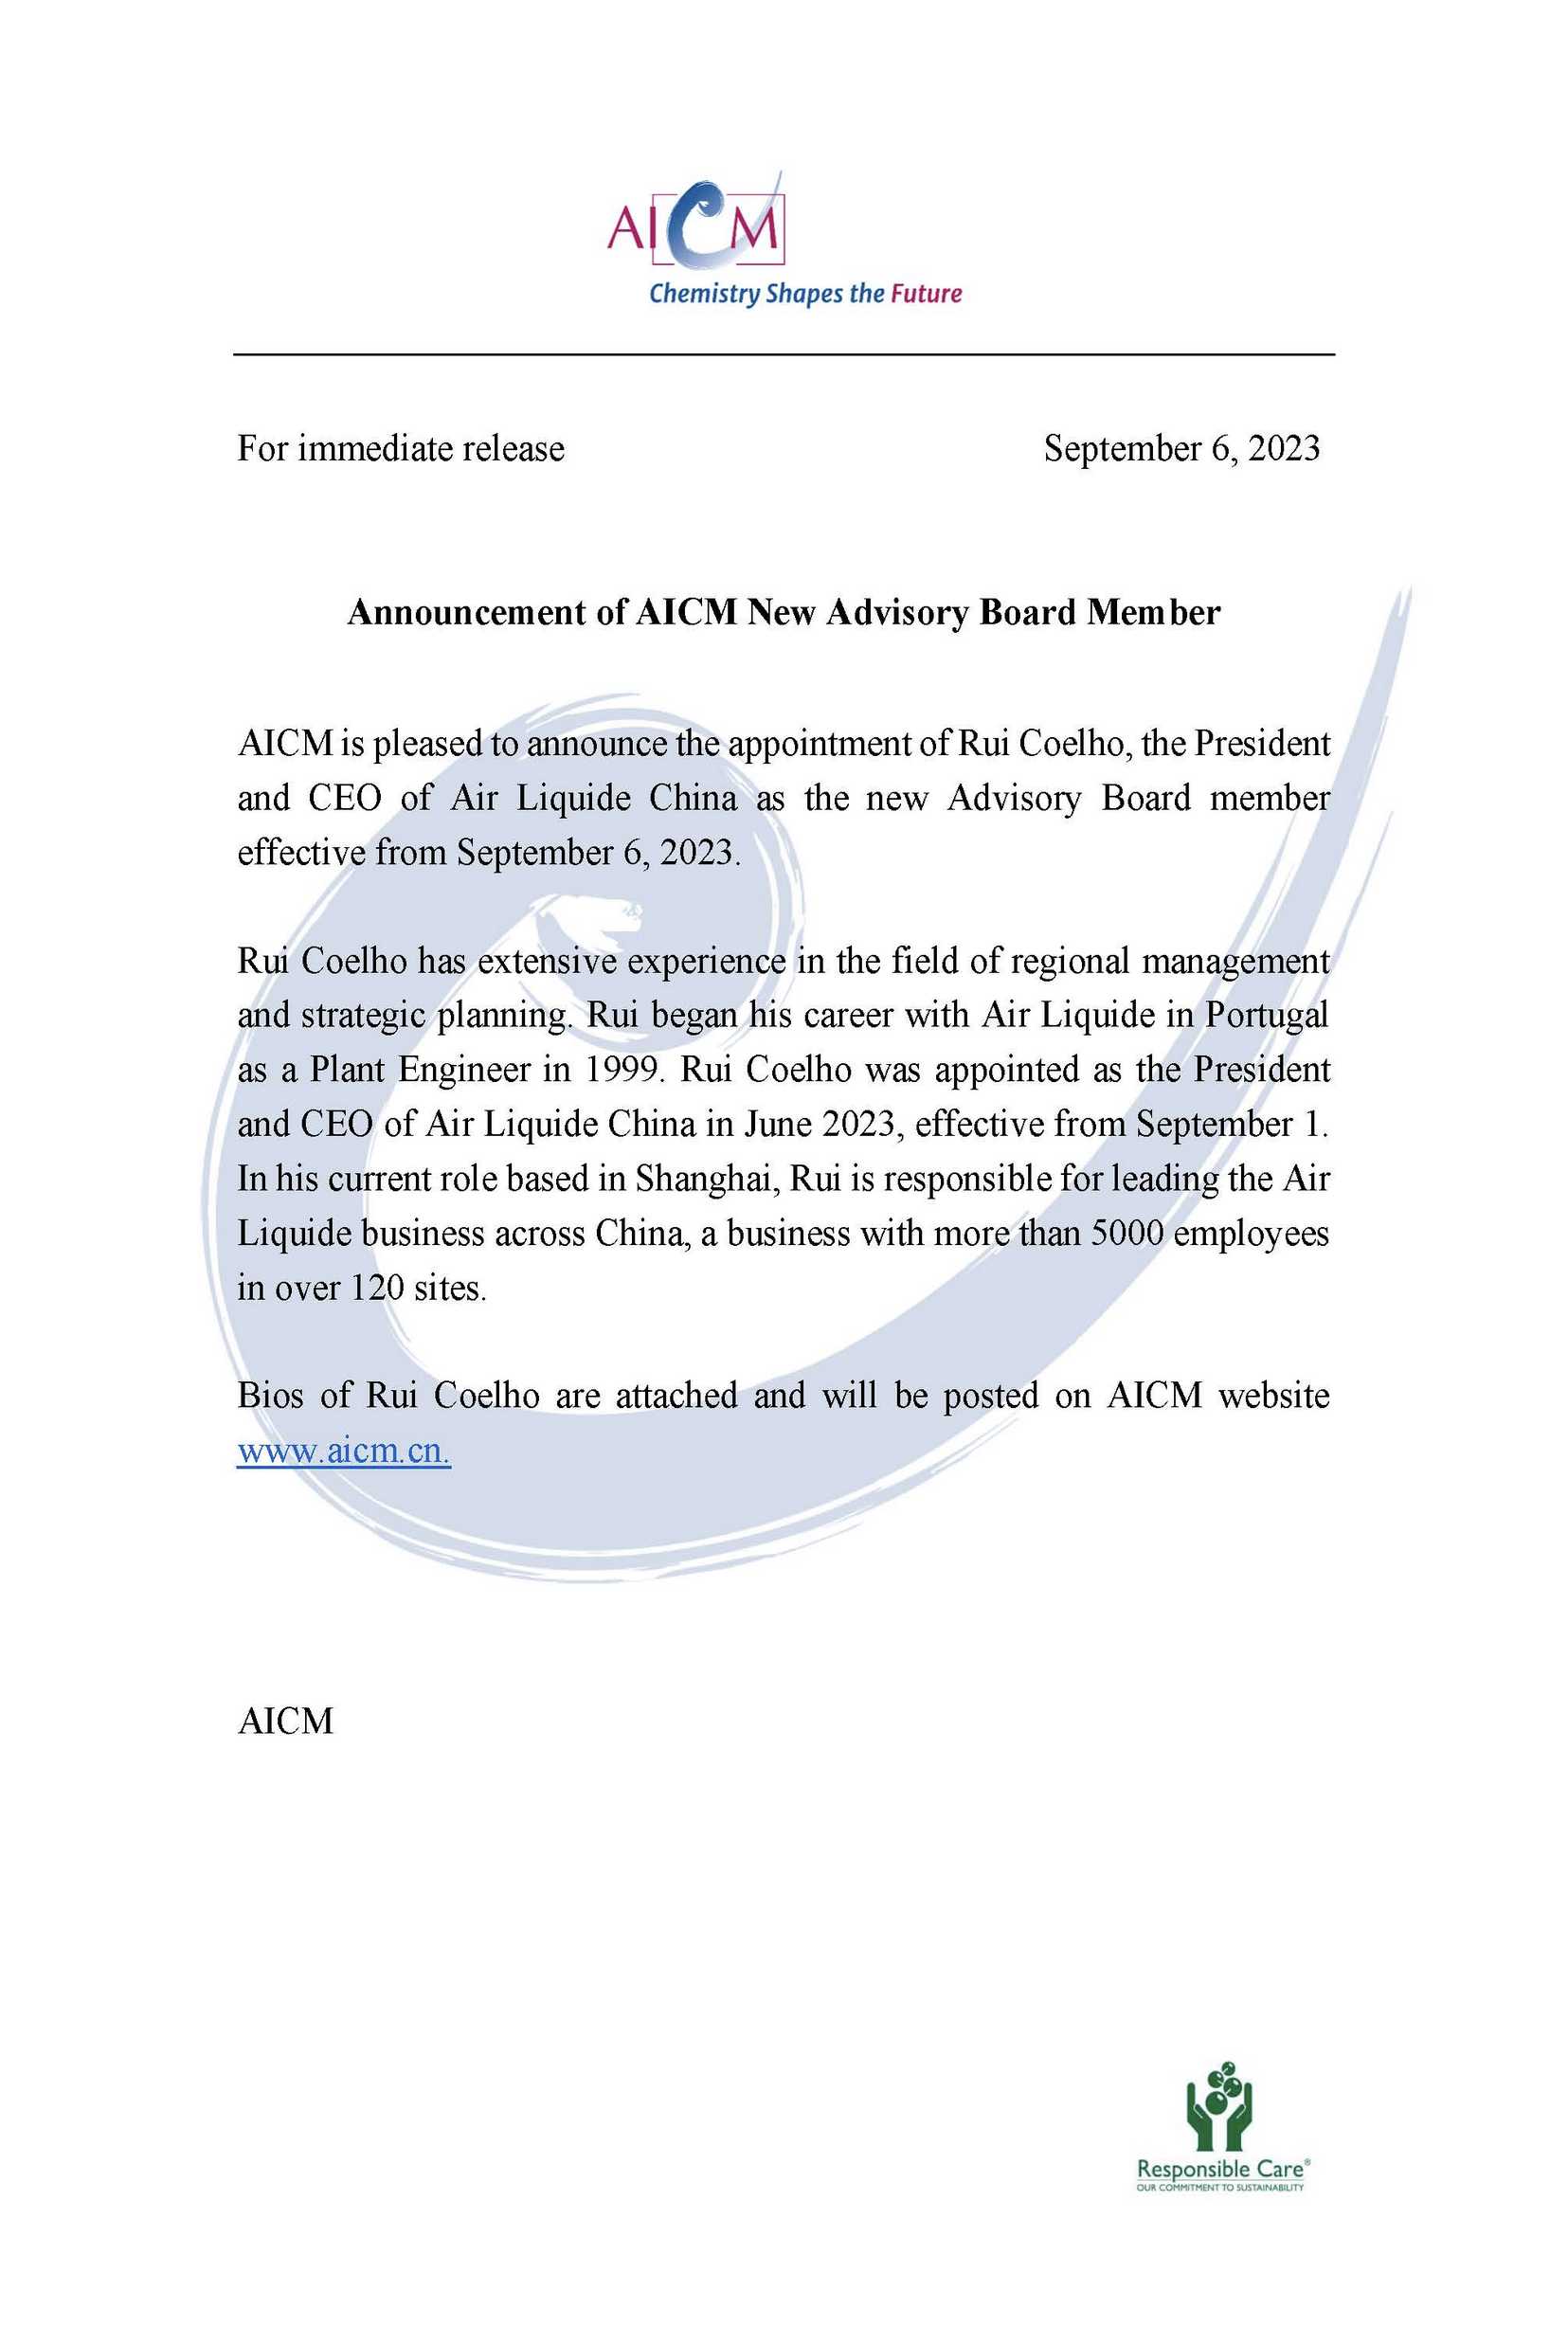 AICM new advisory board member announcement_Rui Coelho_EN - NEW_JPG1655.jpg